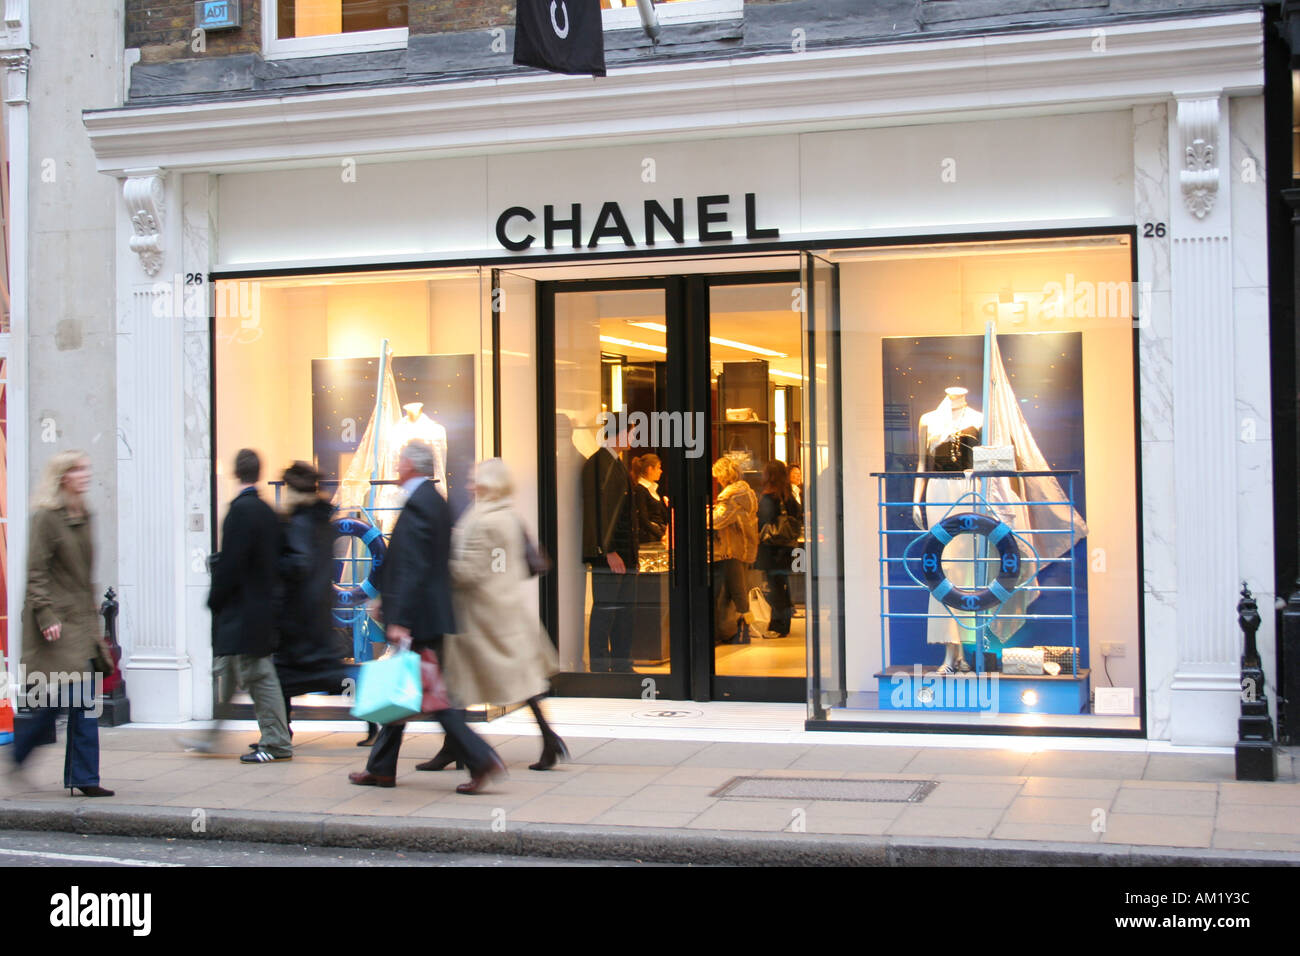 Chanel store, New Bond street, London W1 Stock Photo - Alamy